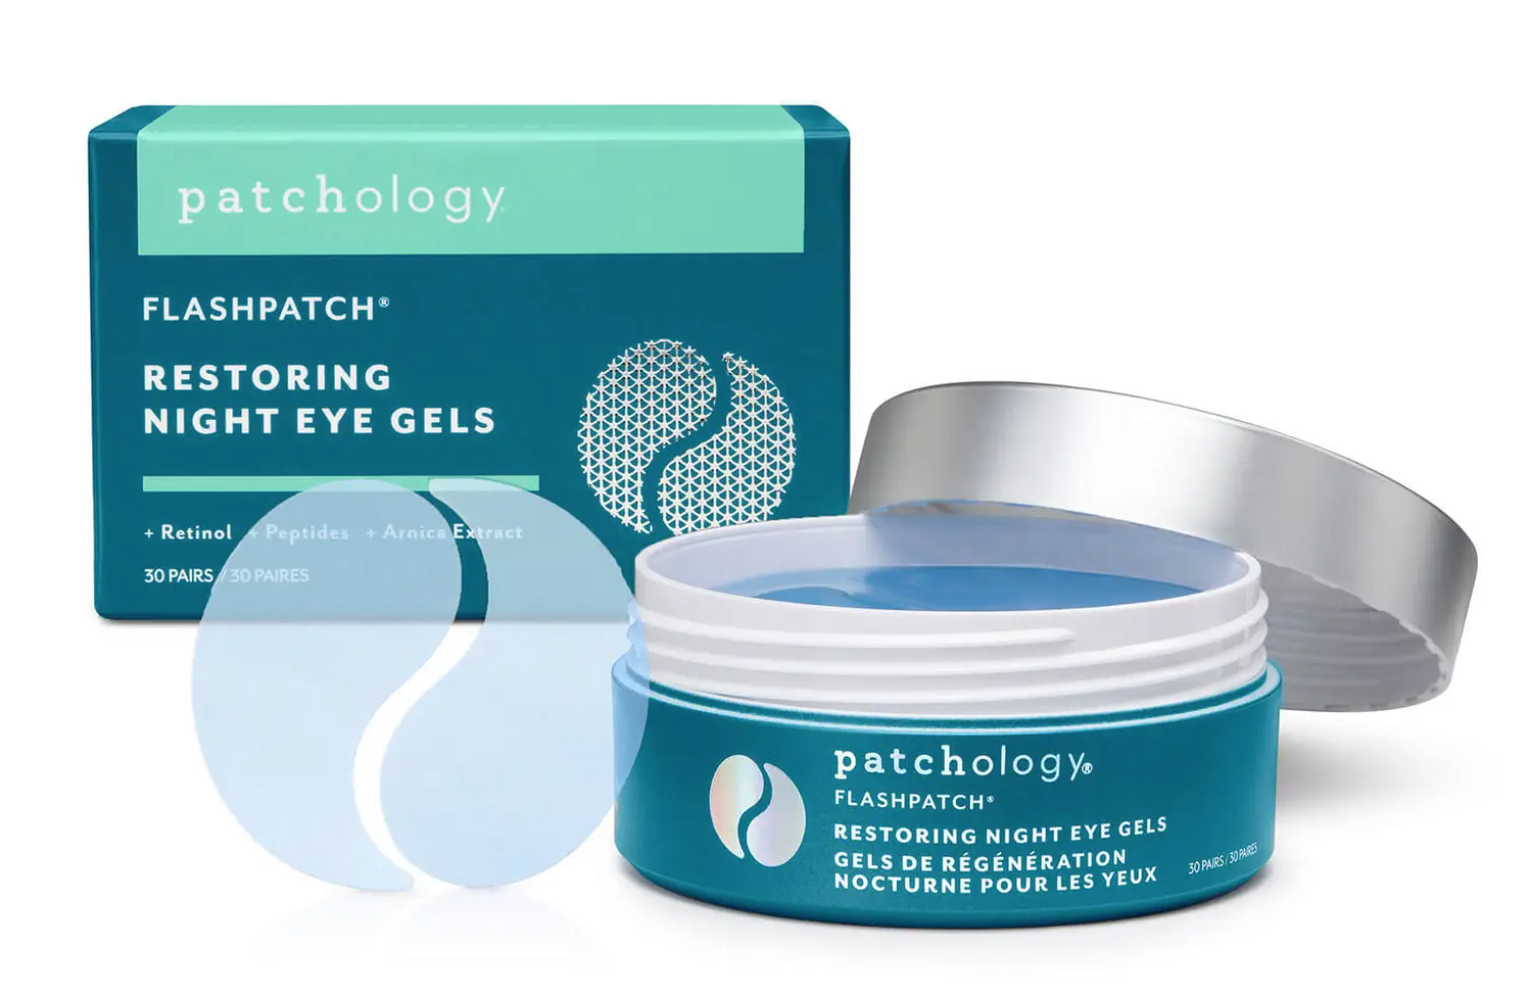 Patchology FlashPatch Restoring Night Eye Gels, SkinStore New Year's Sale